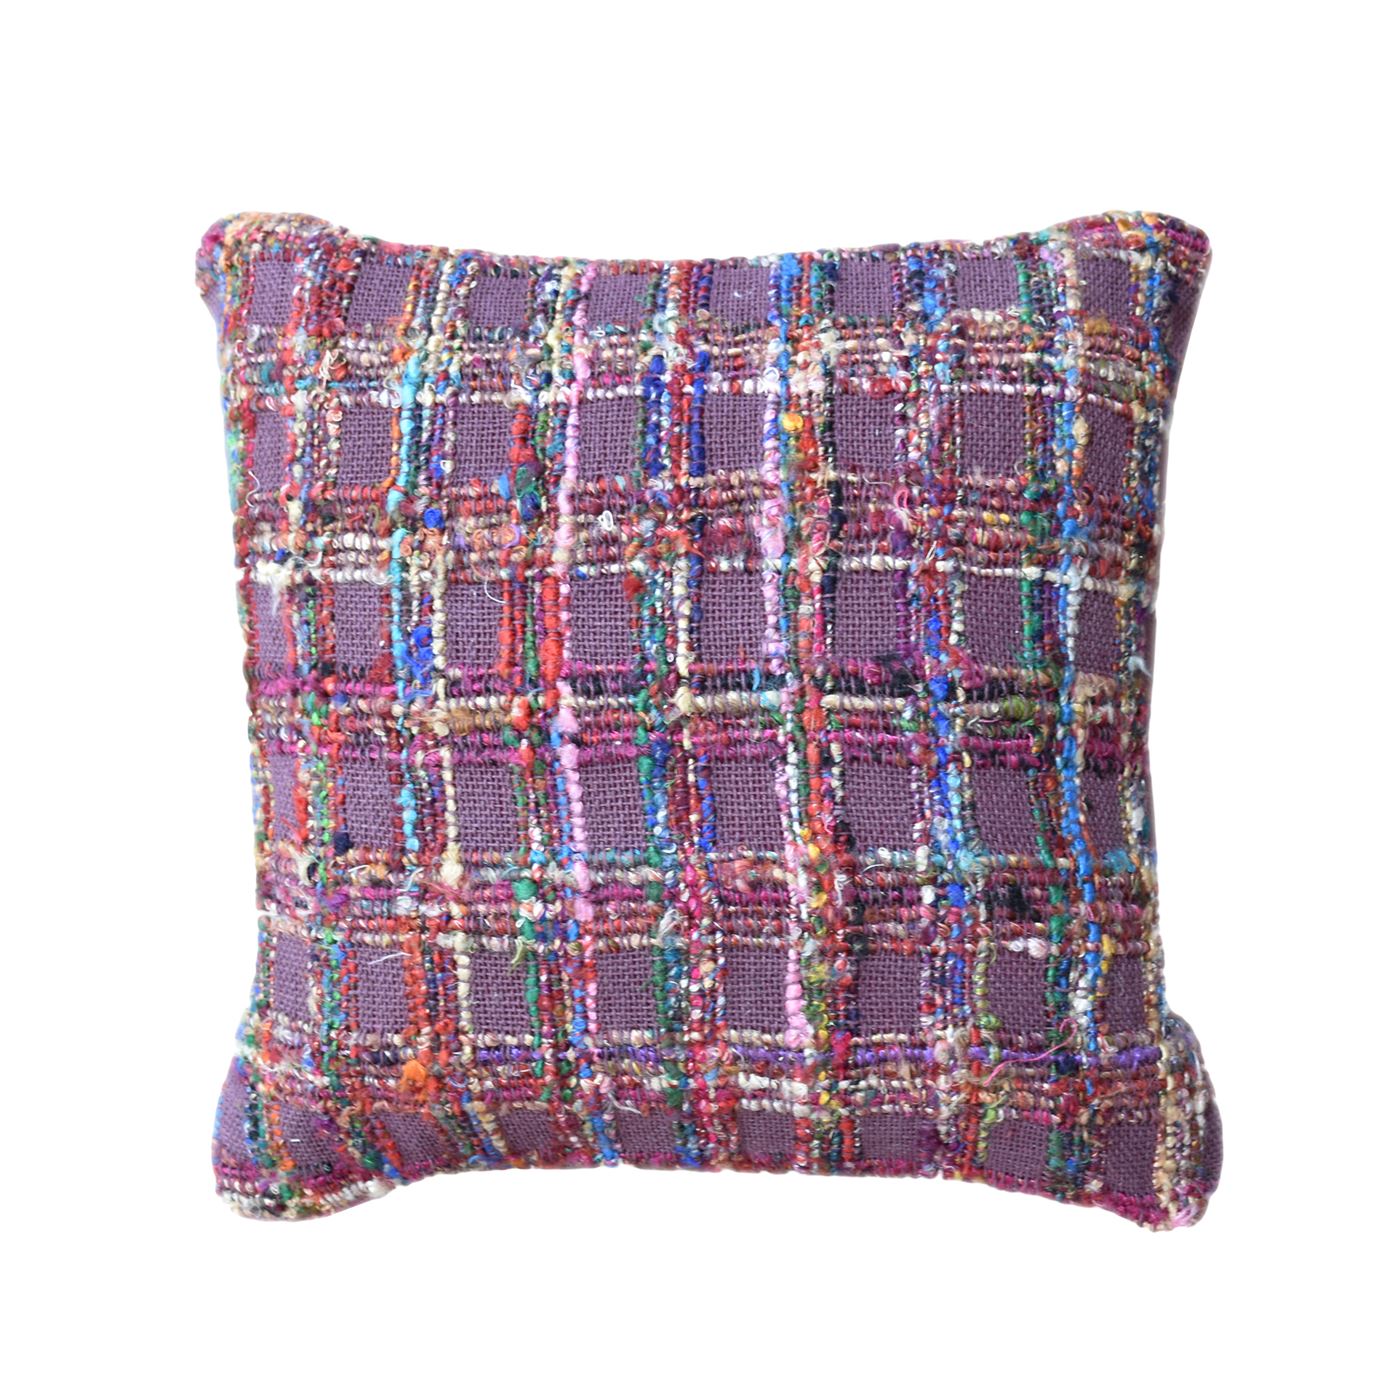 Melun Pillow, Polyester, Cotton, Multi, Pitloom, Flat Weave